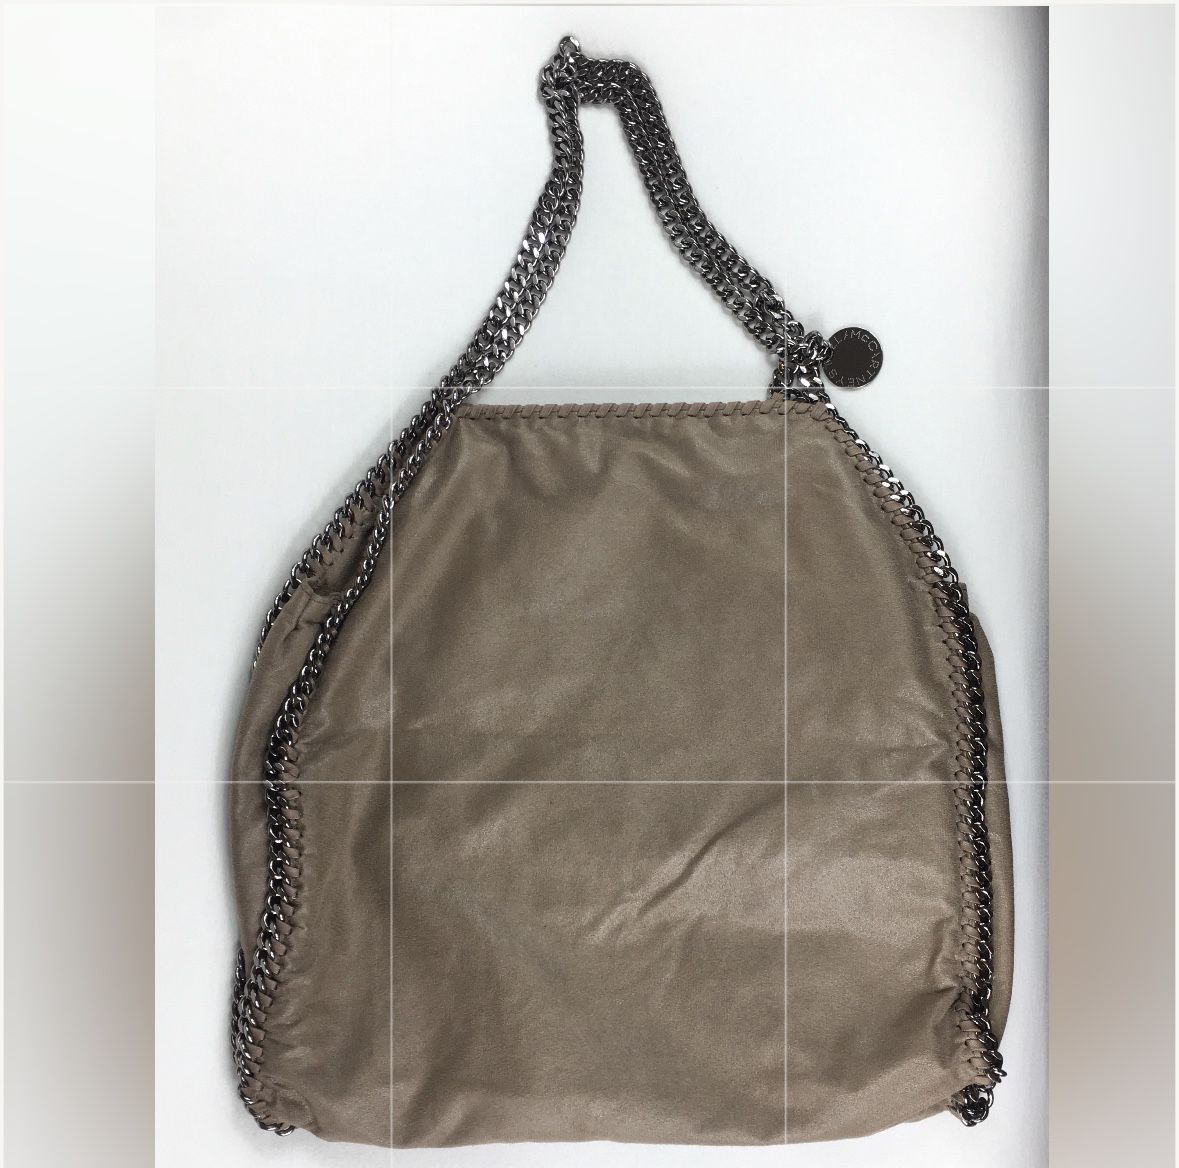 Falabella Shaggy deer beige large tote bag purse heavy chain metal handles